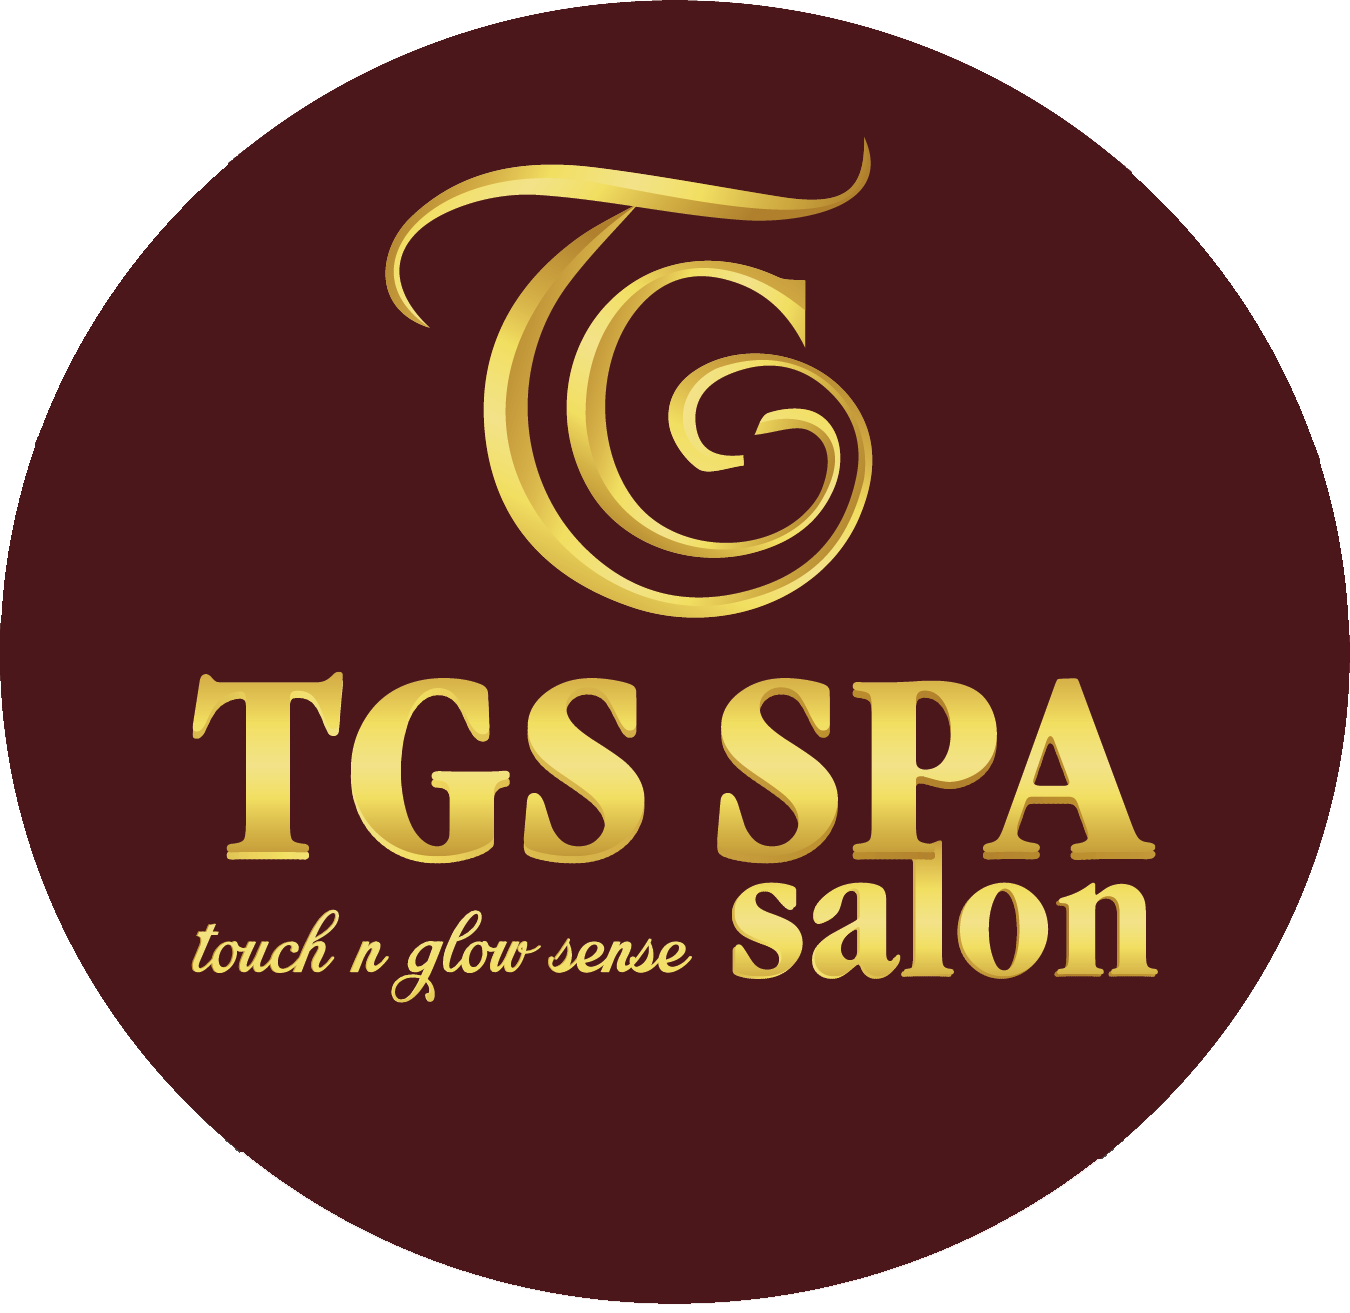 TGS SPA & SALON|Salon|Active Life